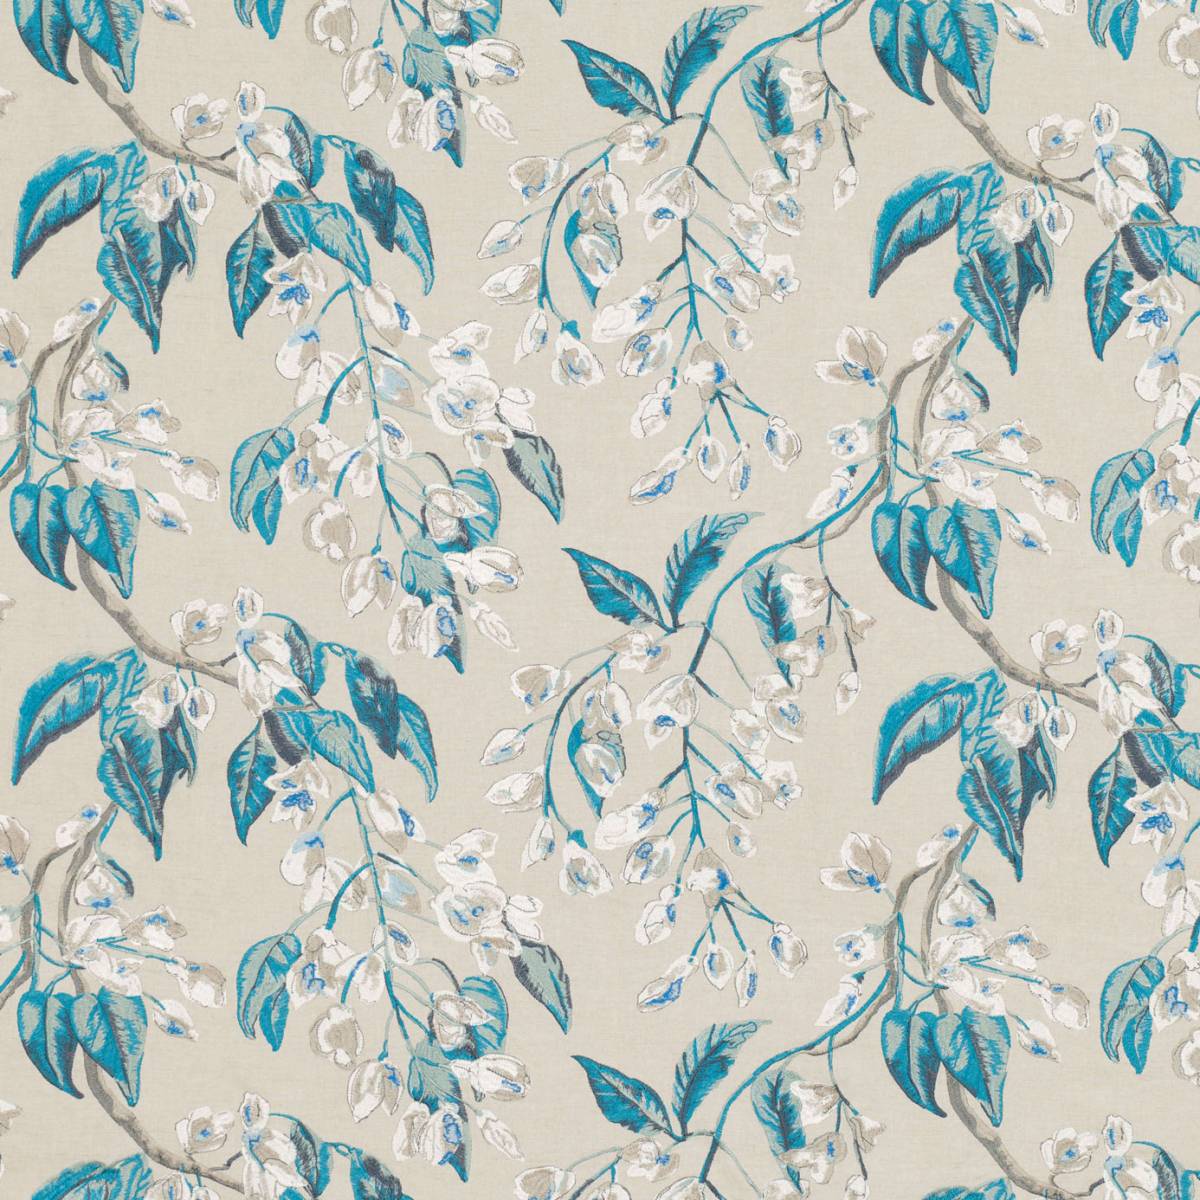 Wisteria Embroidery Fabric - Peacock (7851/02) - Romo Gardenia Fabrics ...